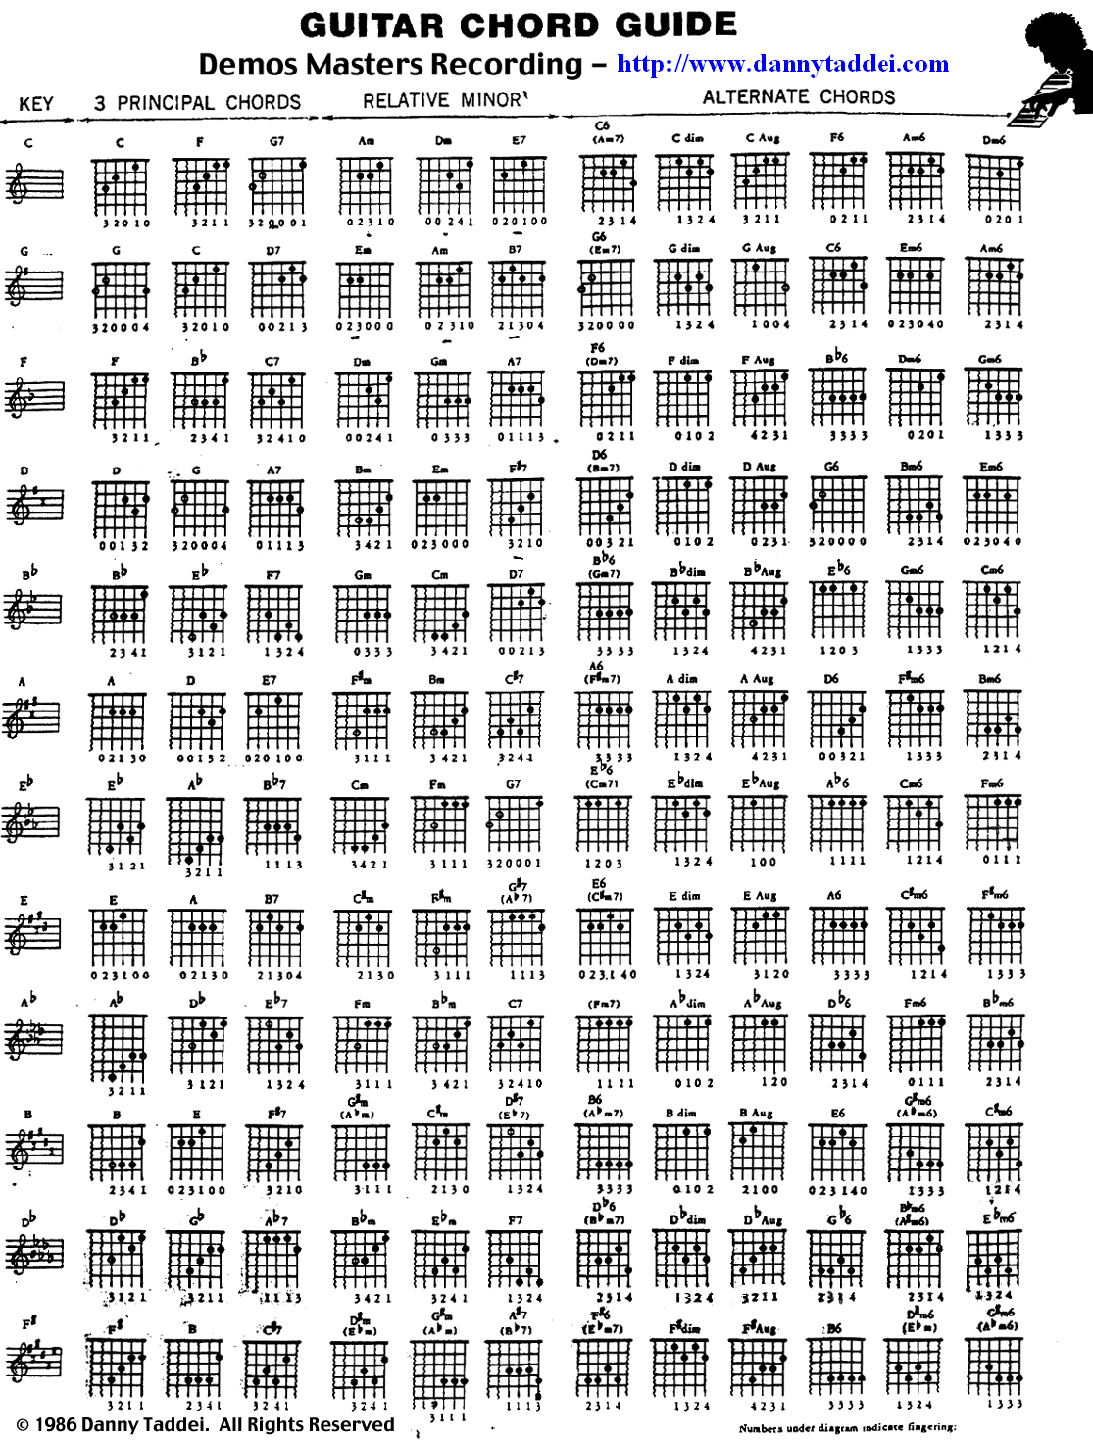 http://1.bp.blogspot.com/_z8XQt6nk2l4/TEzzQGkGHAI/AAAAAAAAEEA/xdVbCjsaKH0/s1600/03+~+Guitar+Chord+Guide+~+by+Danny+Taddei+1986+~+Guitar+Chord+Chart+~+Edited.PNG